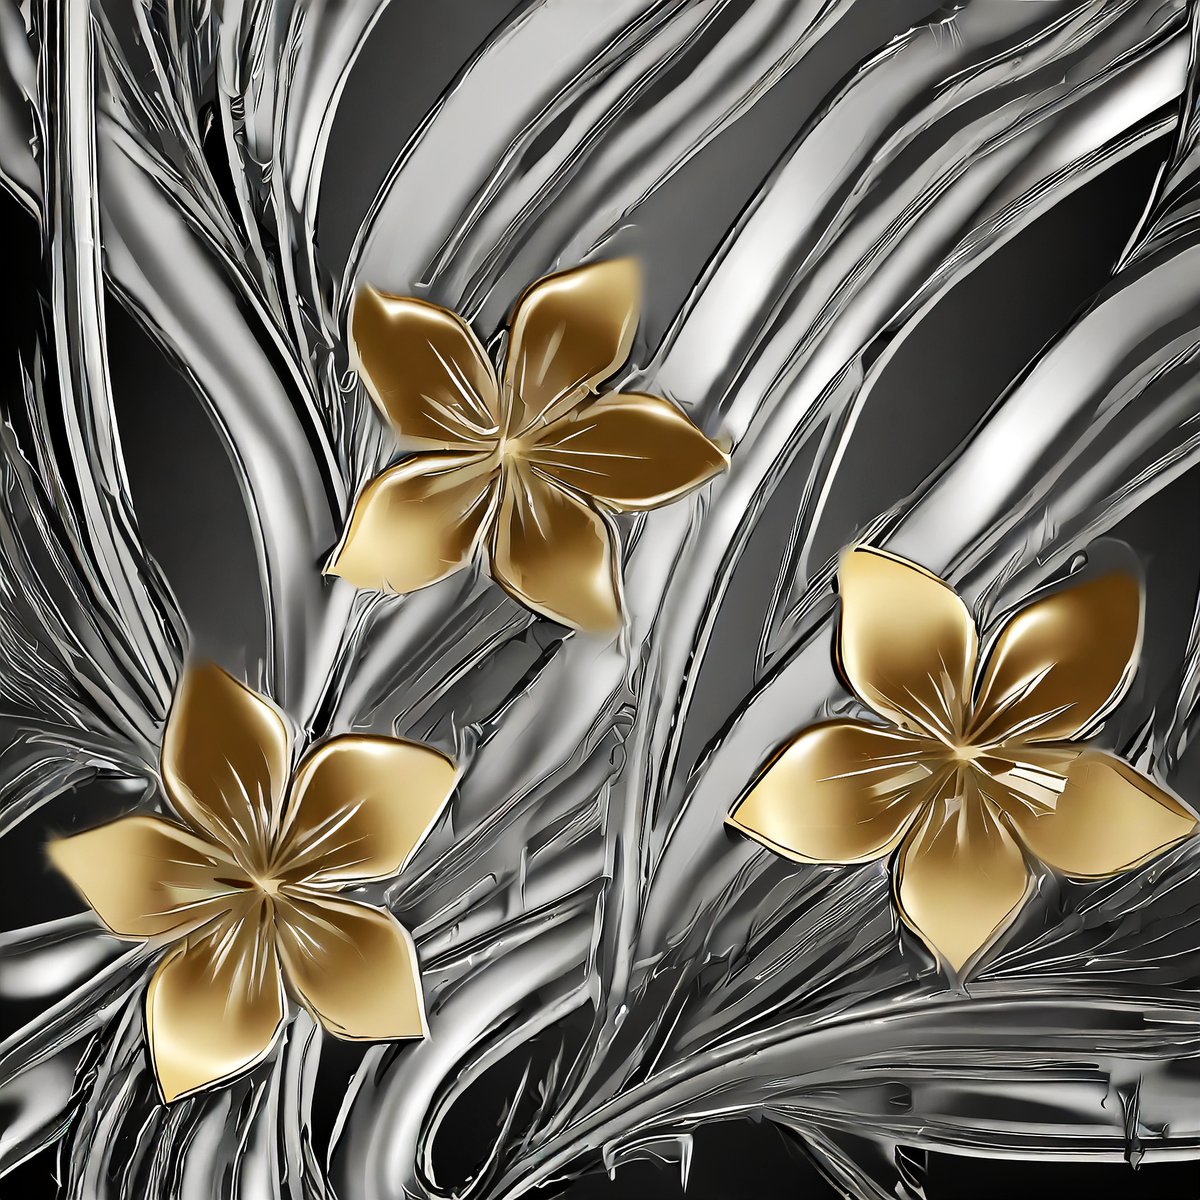 Full metal flowers II
 #geometricart #illustrationart #geometricabstraction #nft #adobeillustrator #adobeillustrator #illustrationartists #illustrator #flowers #abstractart #abstractflowers